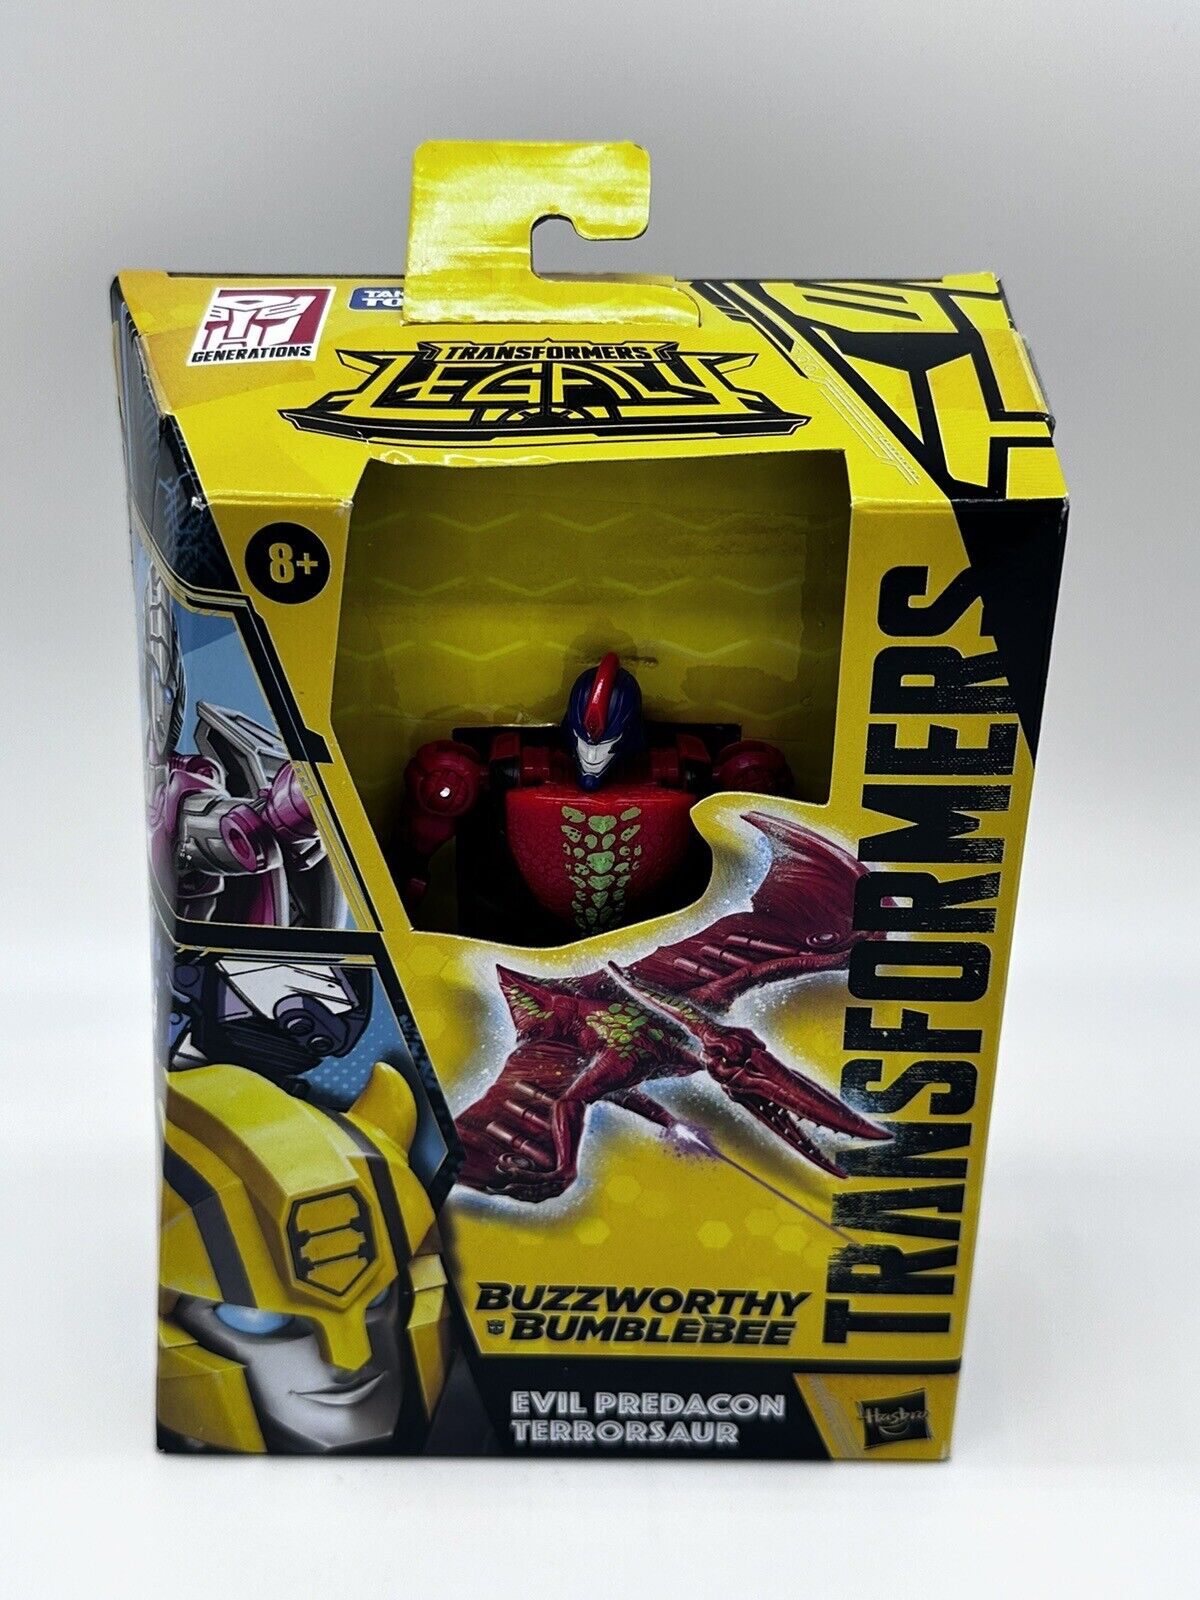 Transformers Legacy Buzzworthy Bumblebee Deluxe Class Predacon Terrorsaur